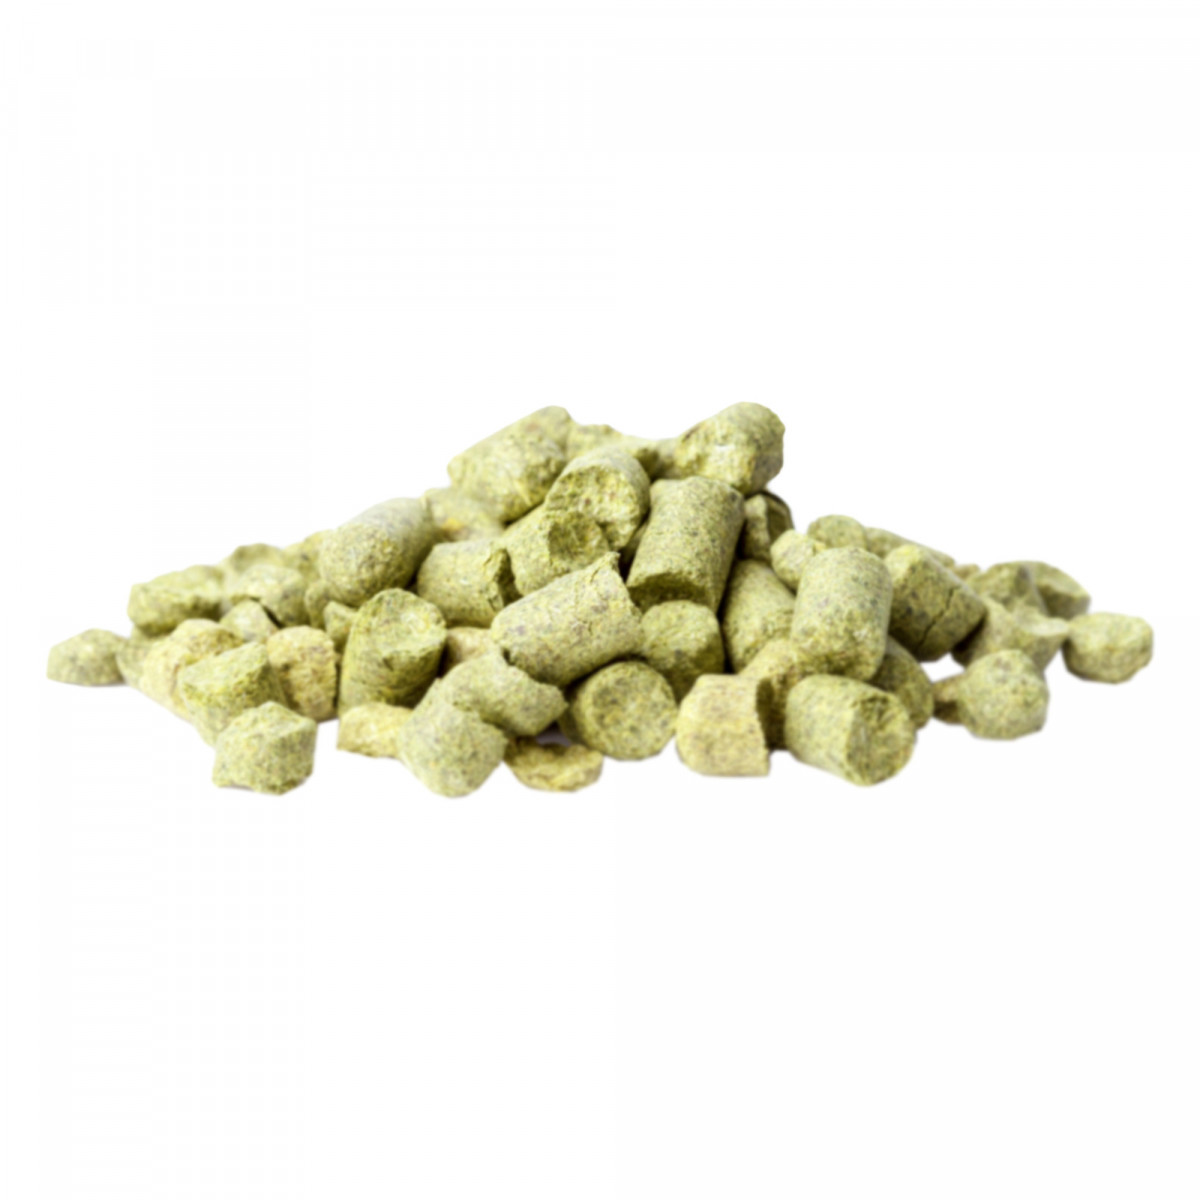 Yakima Chief Hops® Ekuanot® T90 hop pellets - 1 kg